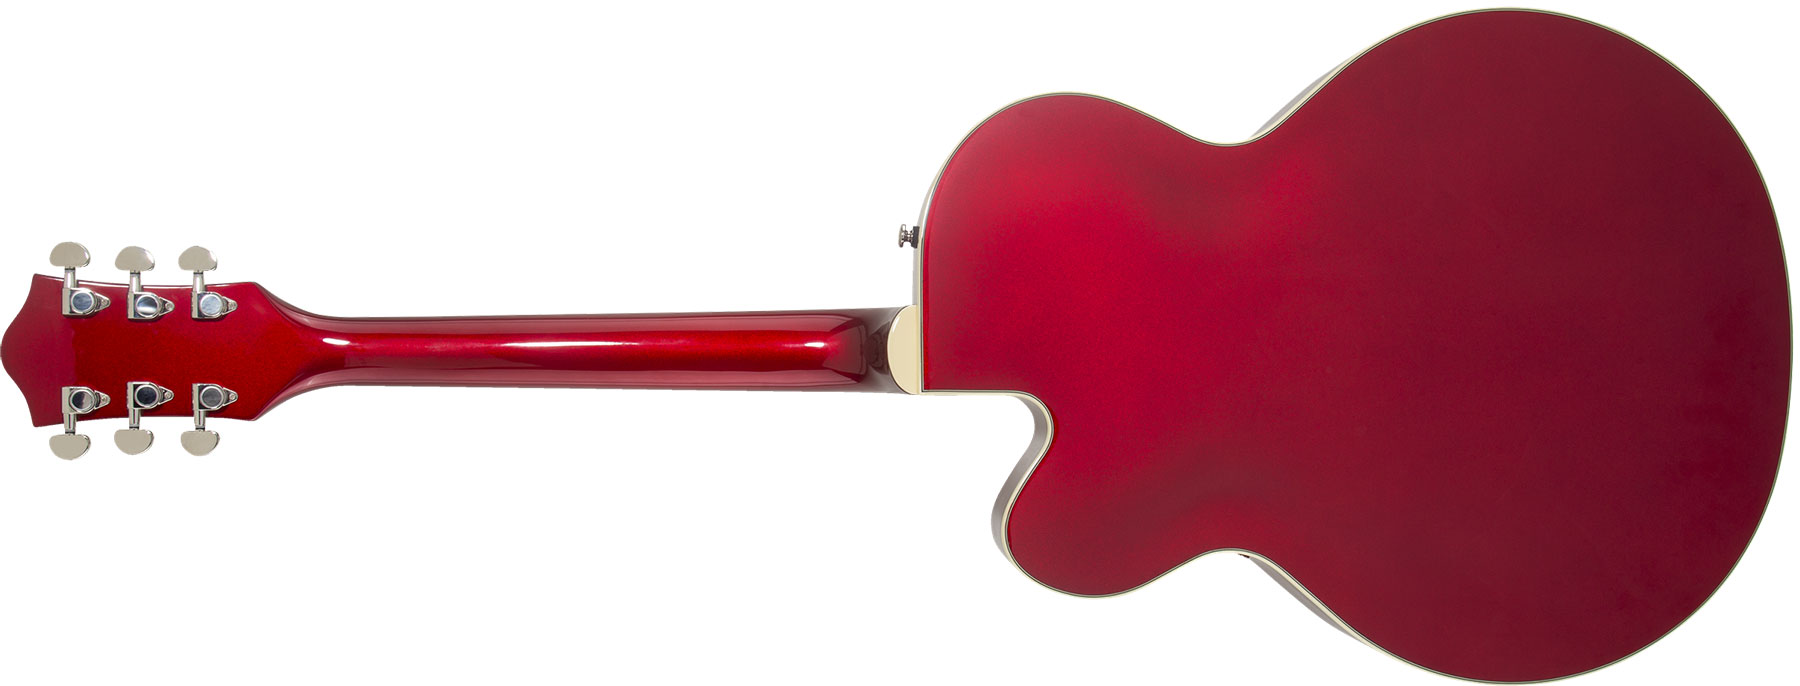 Gretsch G2420t Streamliner Hollow Body Bigsby Hh Trem Lau - Candy Apple Red - Semi-Hollow E-Gitarre - Variation 1